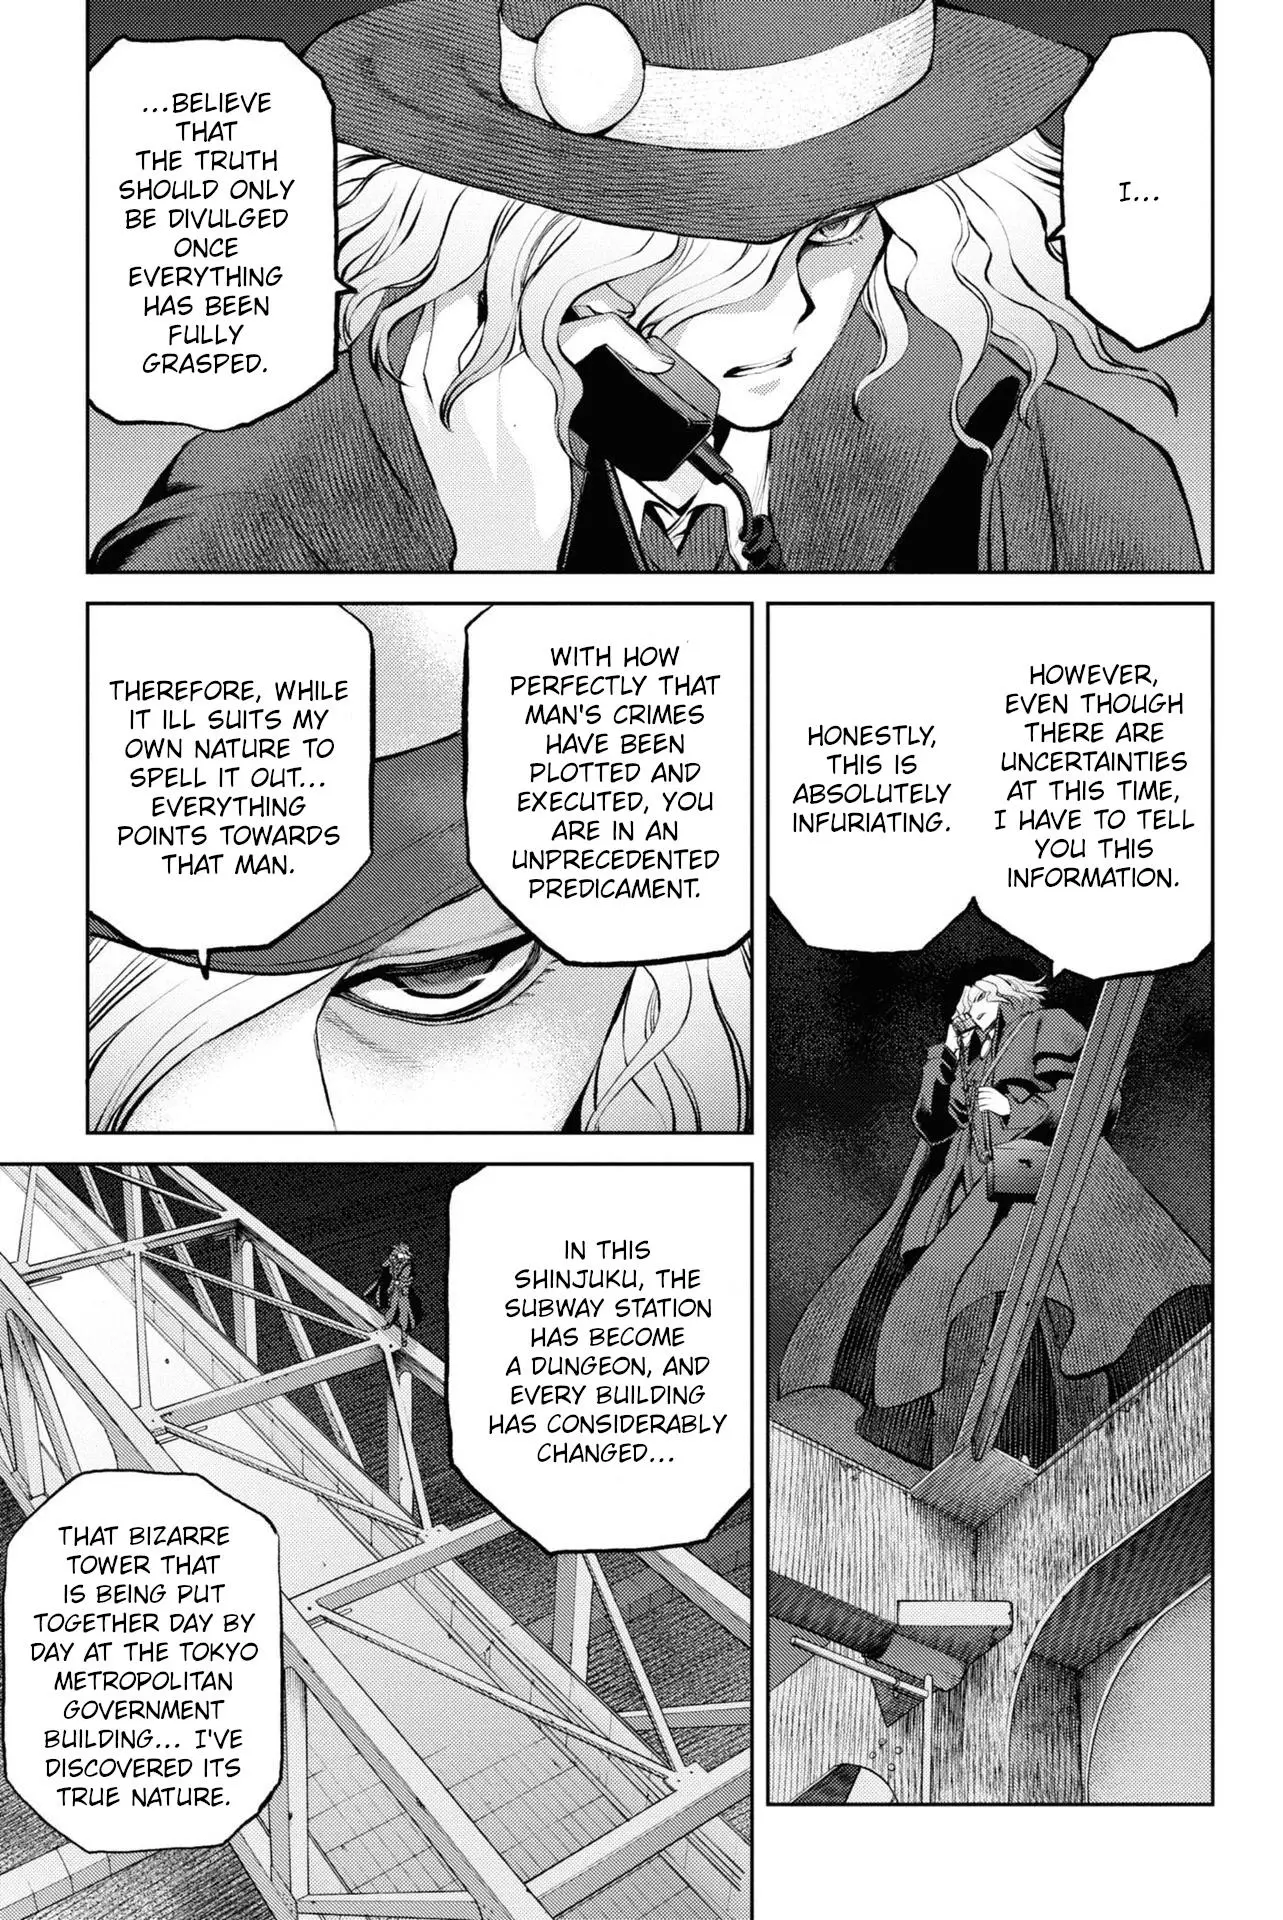 Fate/grand Order: Epic Of Remnant - Pseudo-Singularity I: Quarantined Territory Of Malice, Shinjuku - Shinjuku Phantom Incident - 11 page 5-8126c5fe